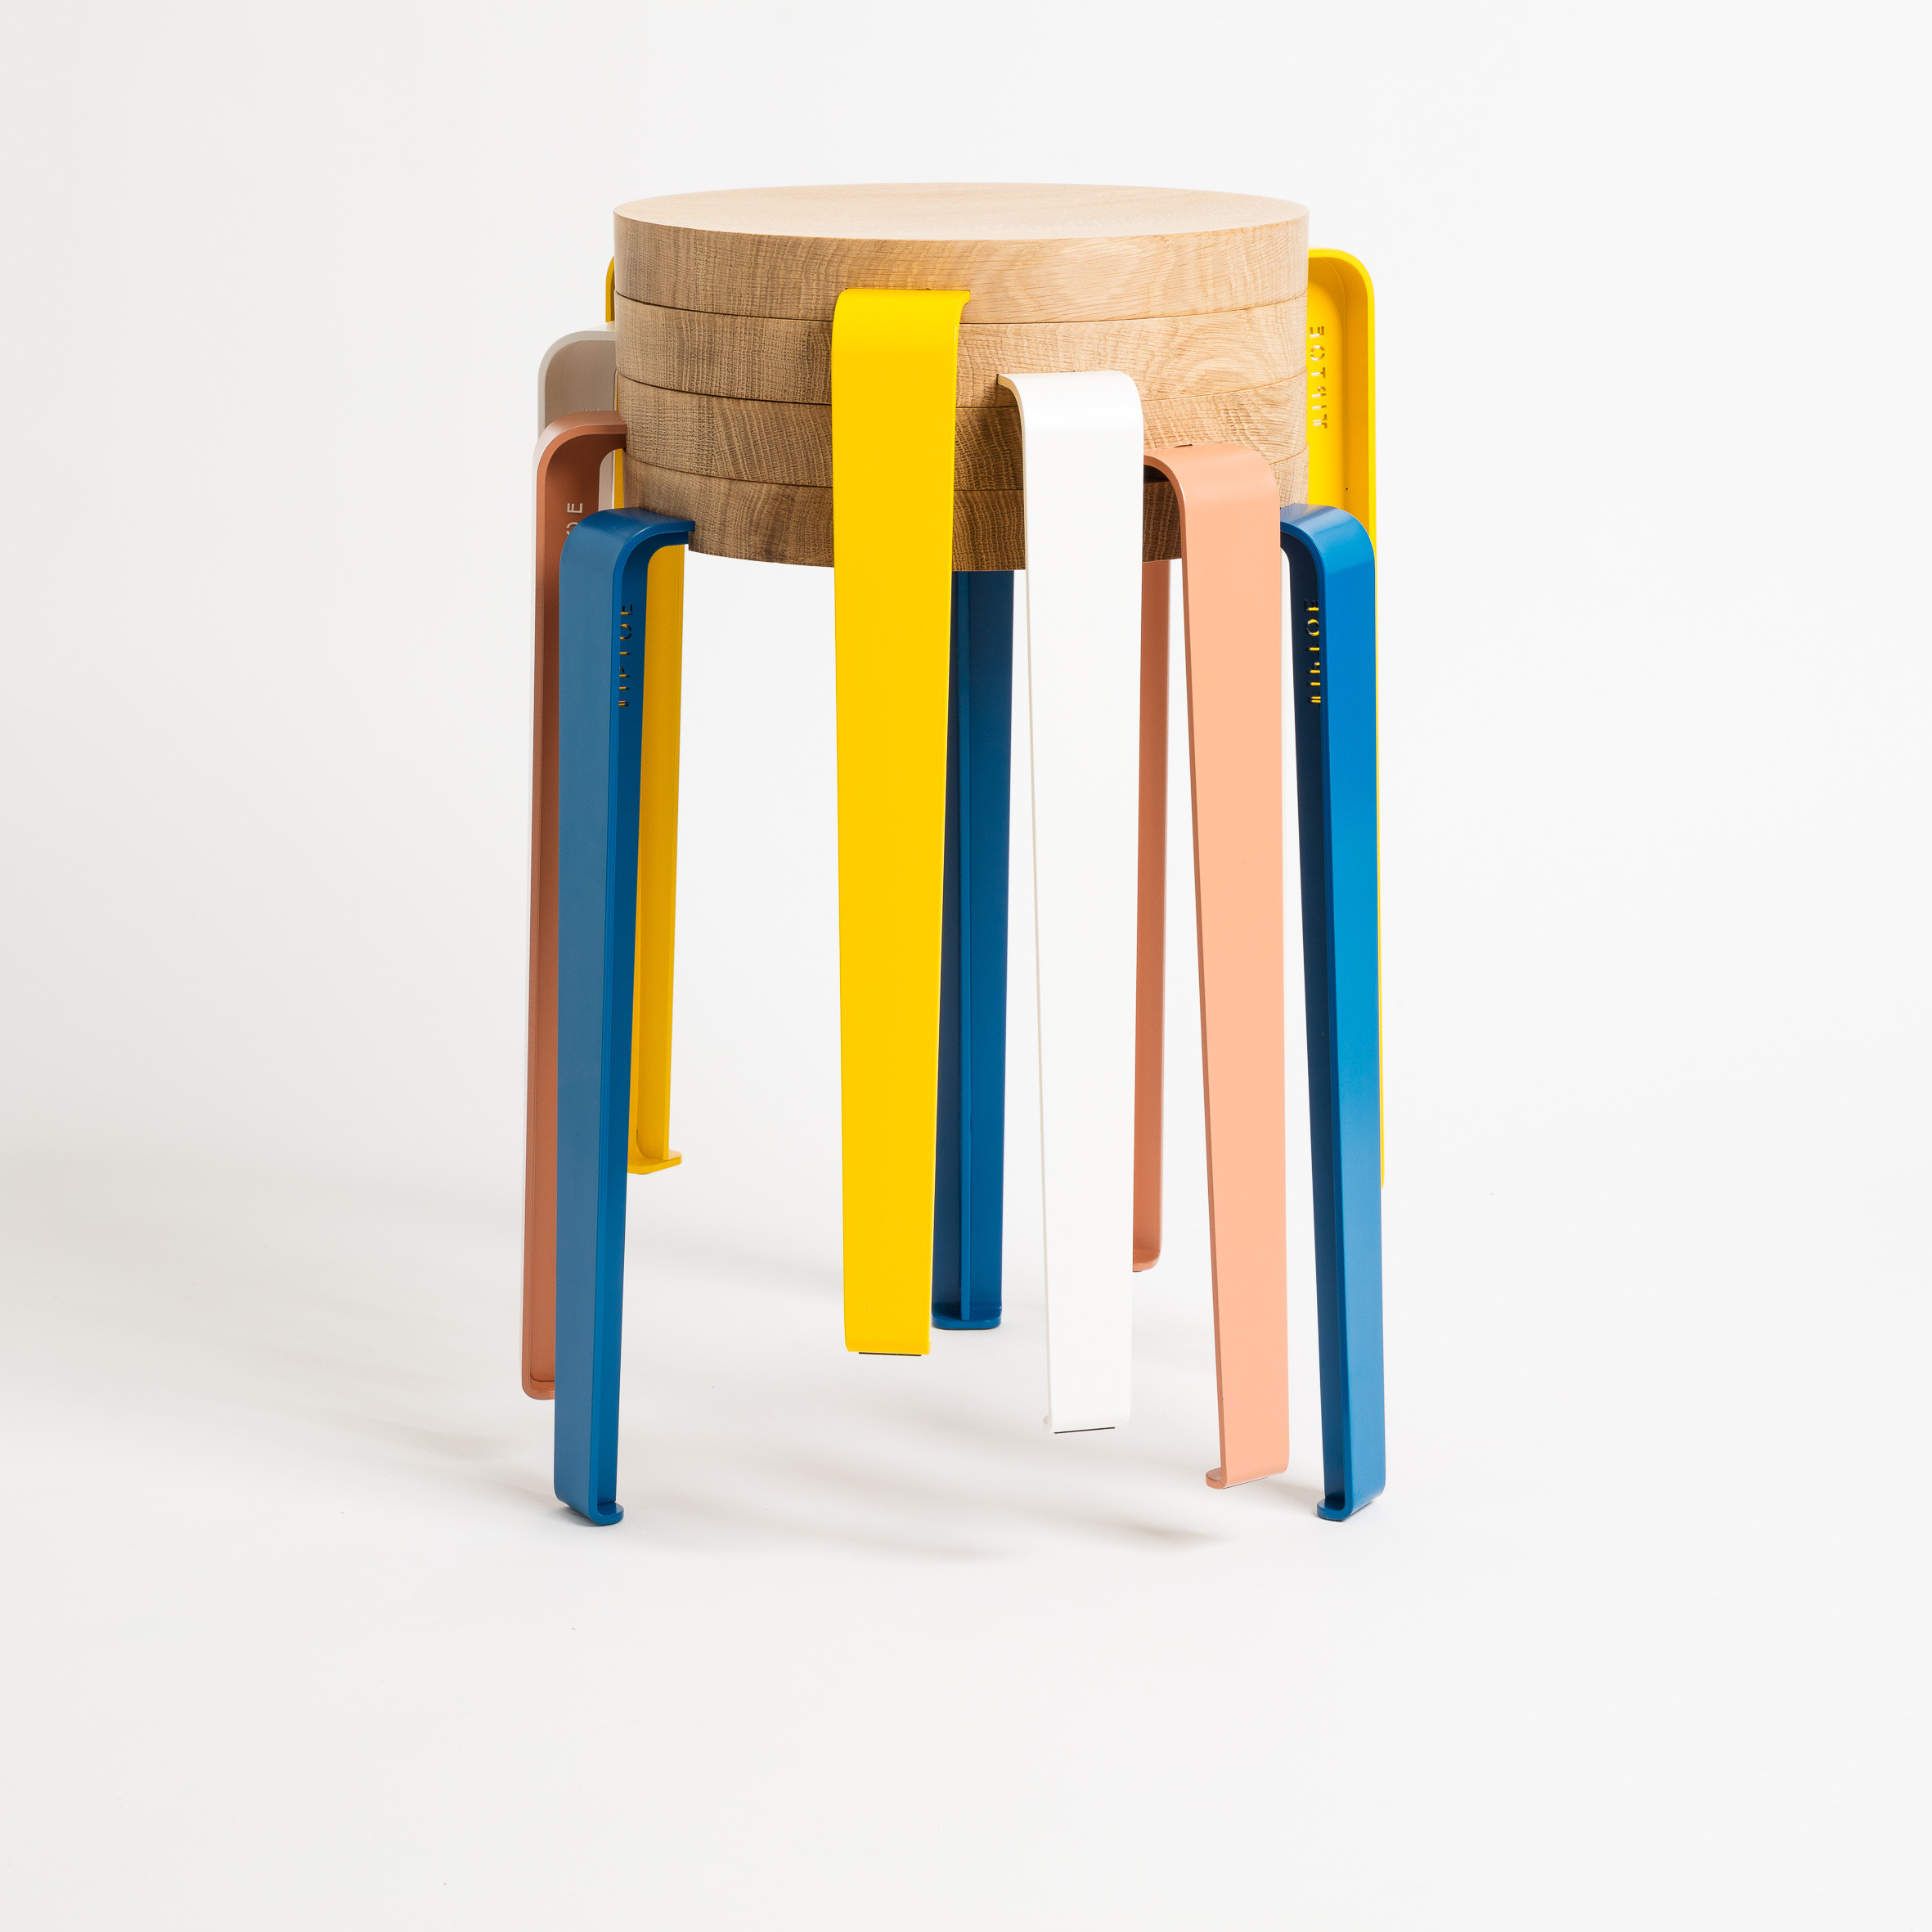 The LOU stool from TIPTOE, the versatile stool